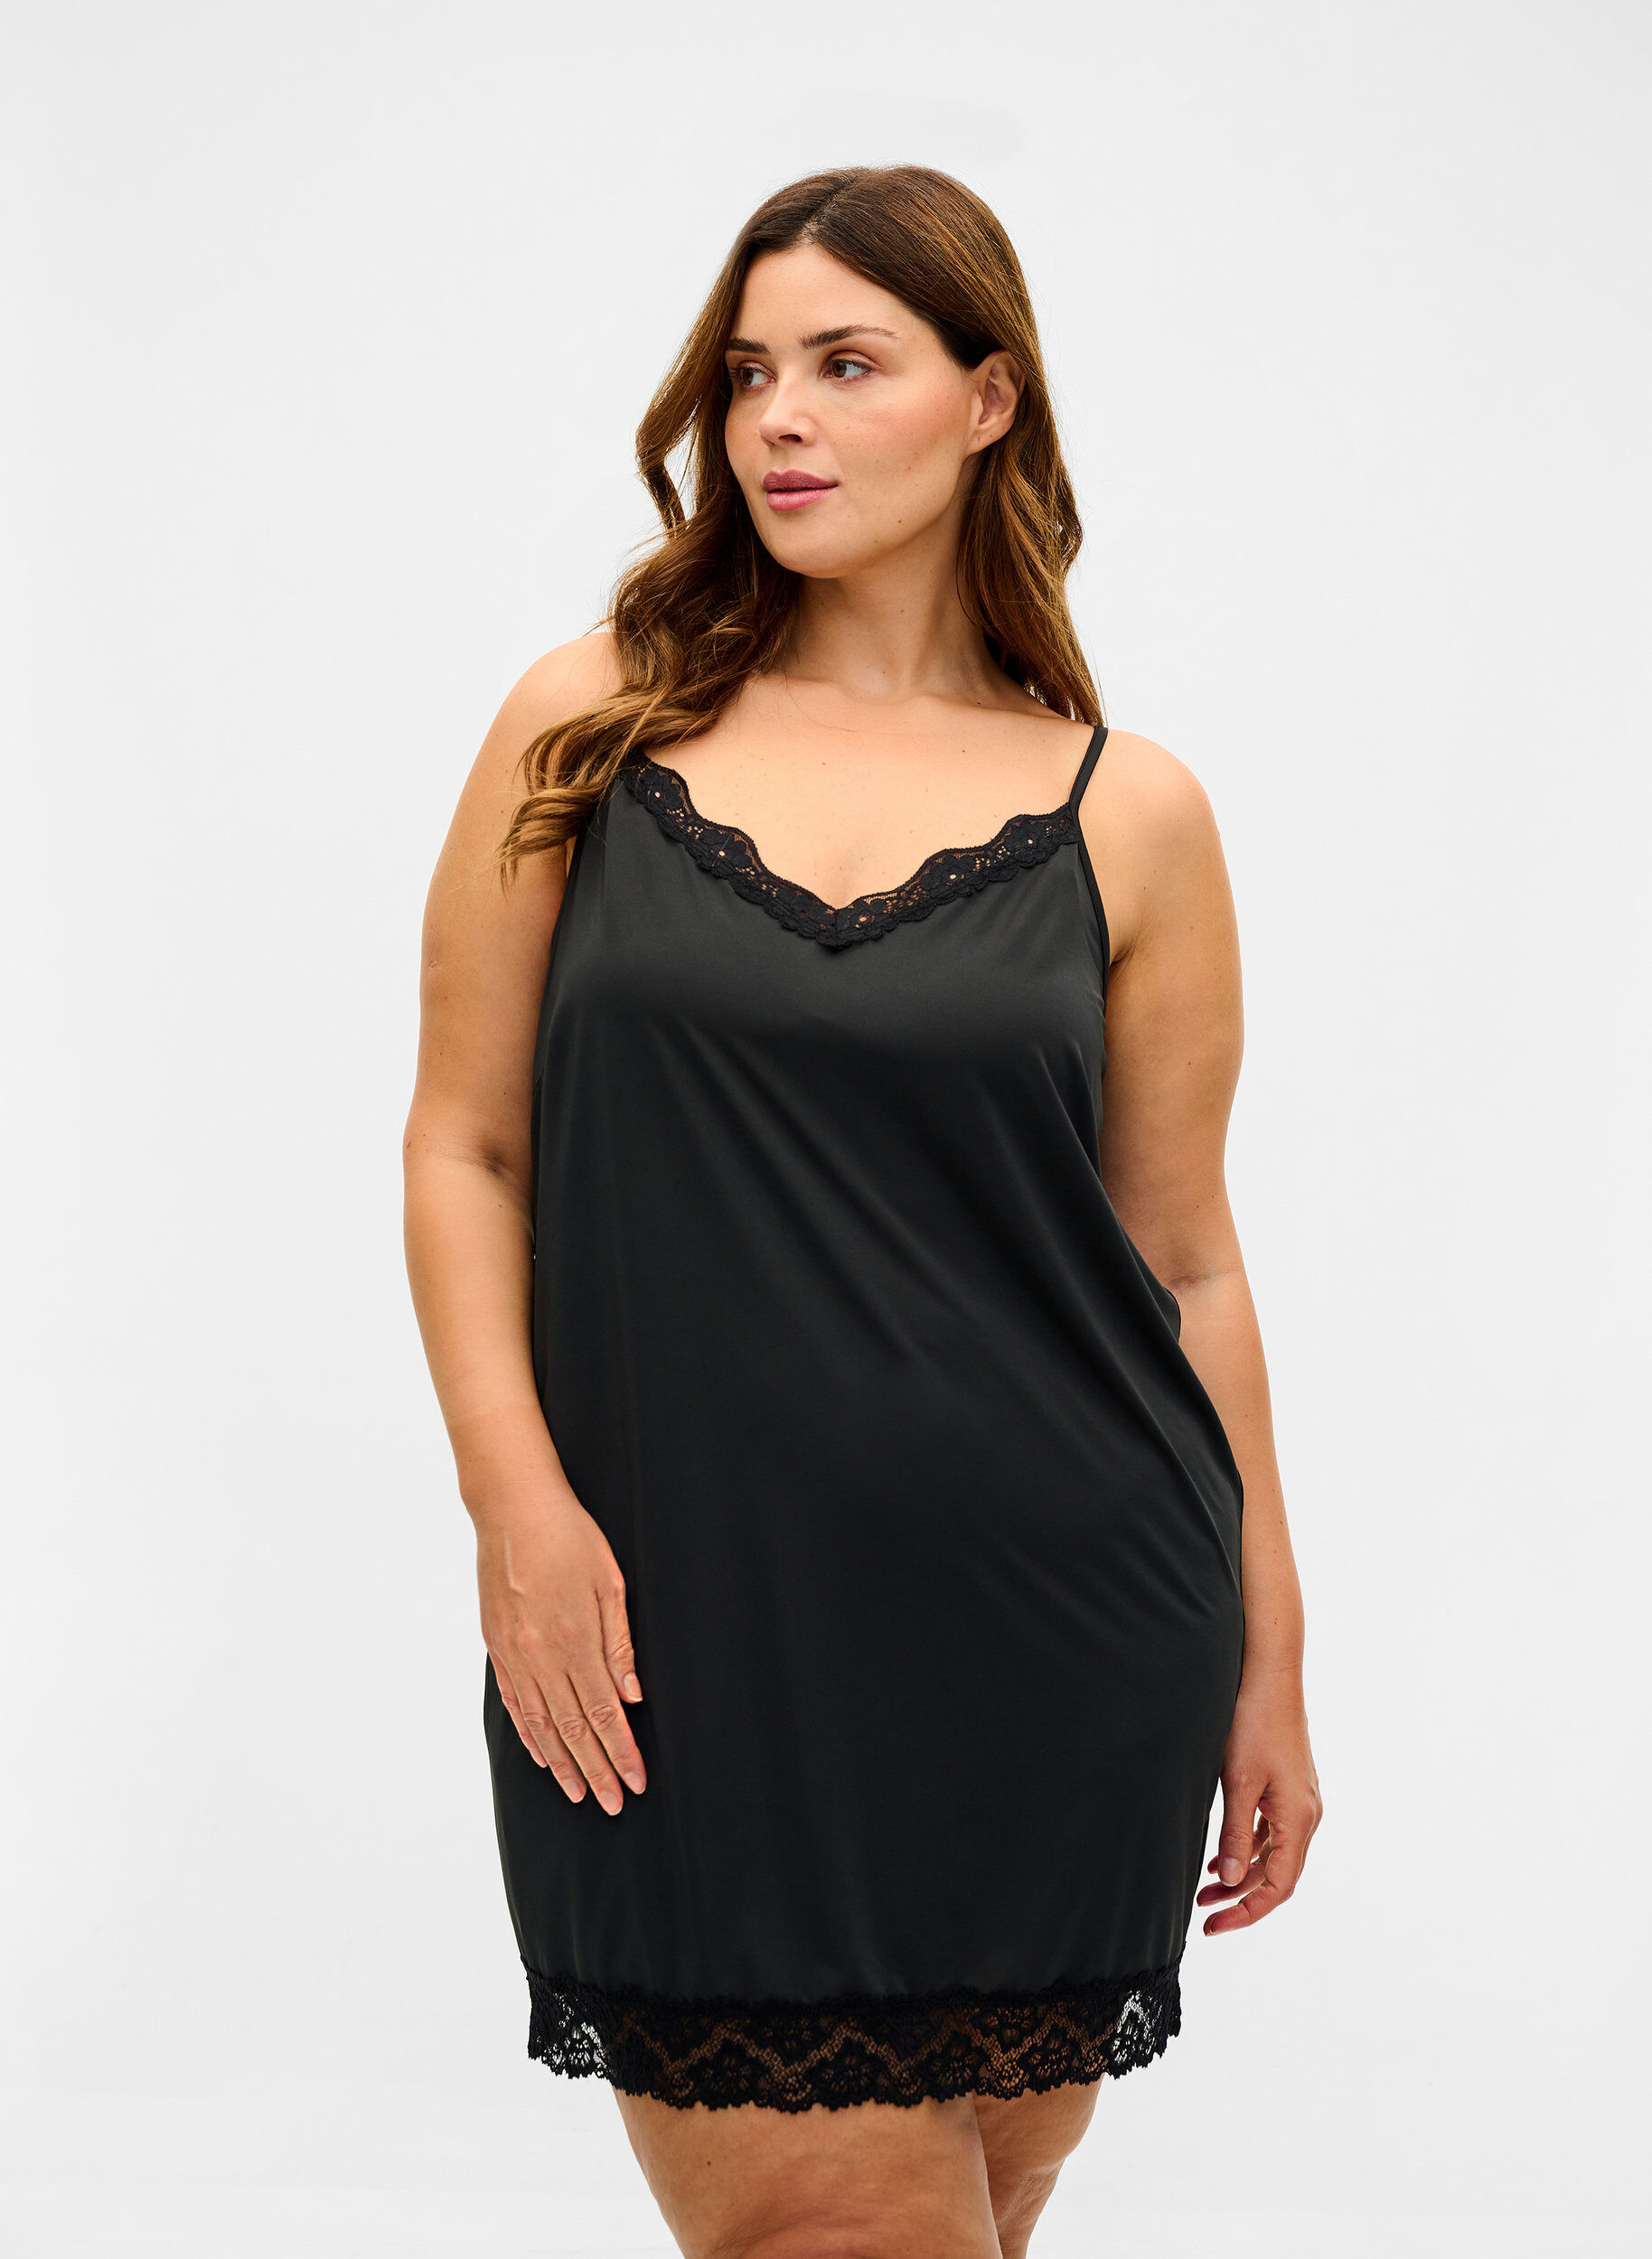 Women's Plus size Nightgowns - Zizzifashion